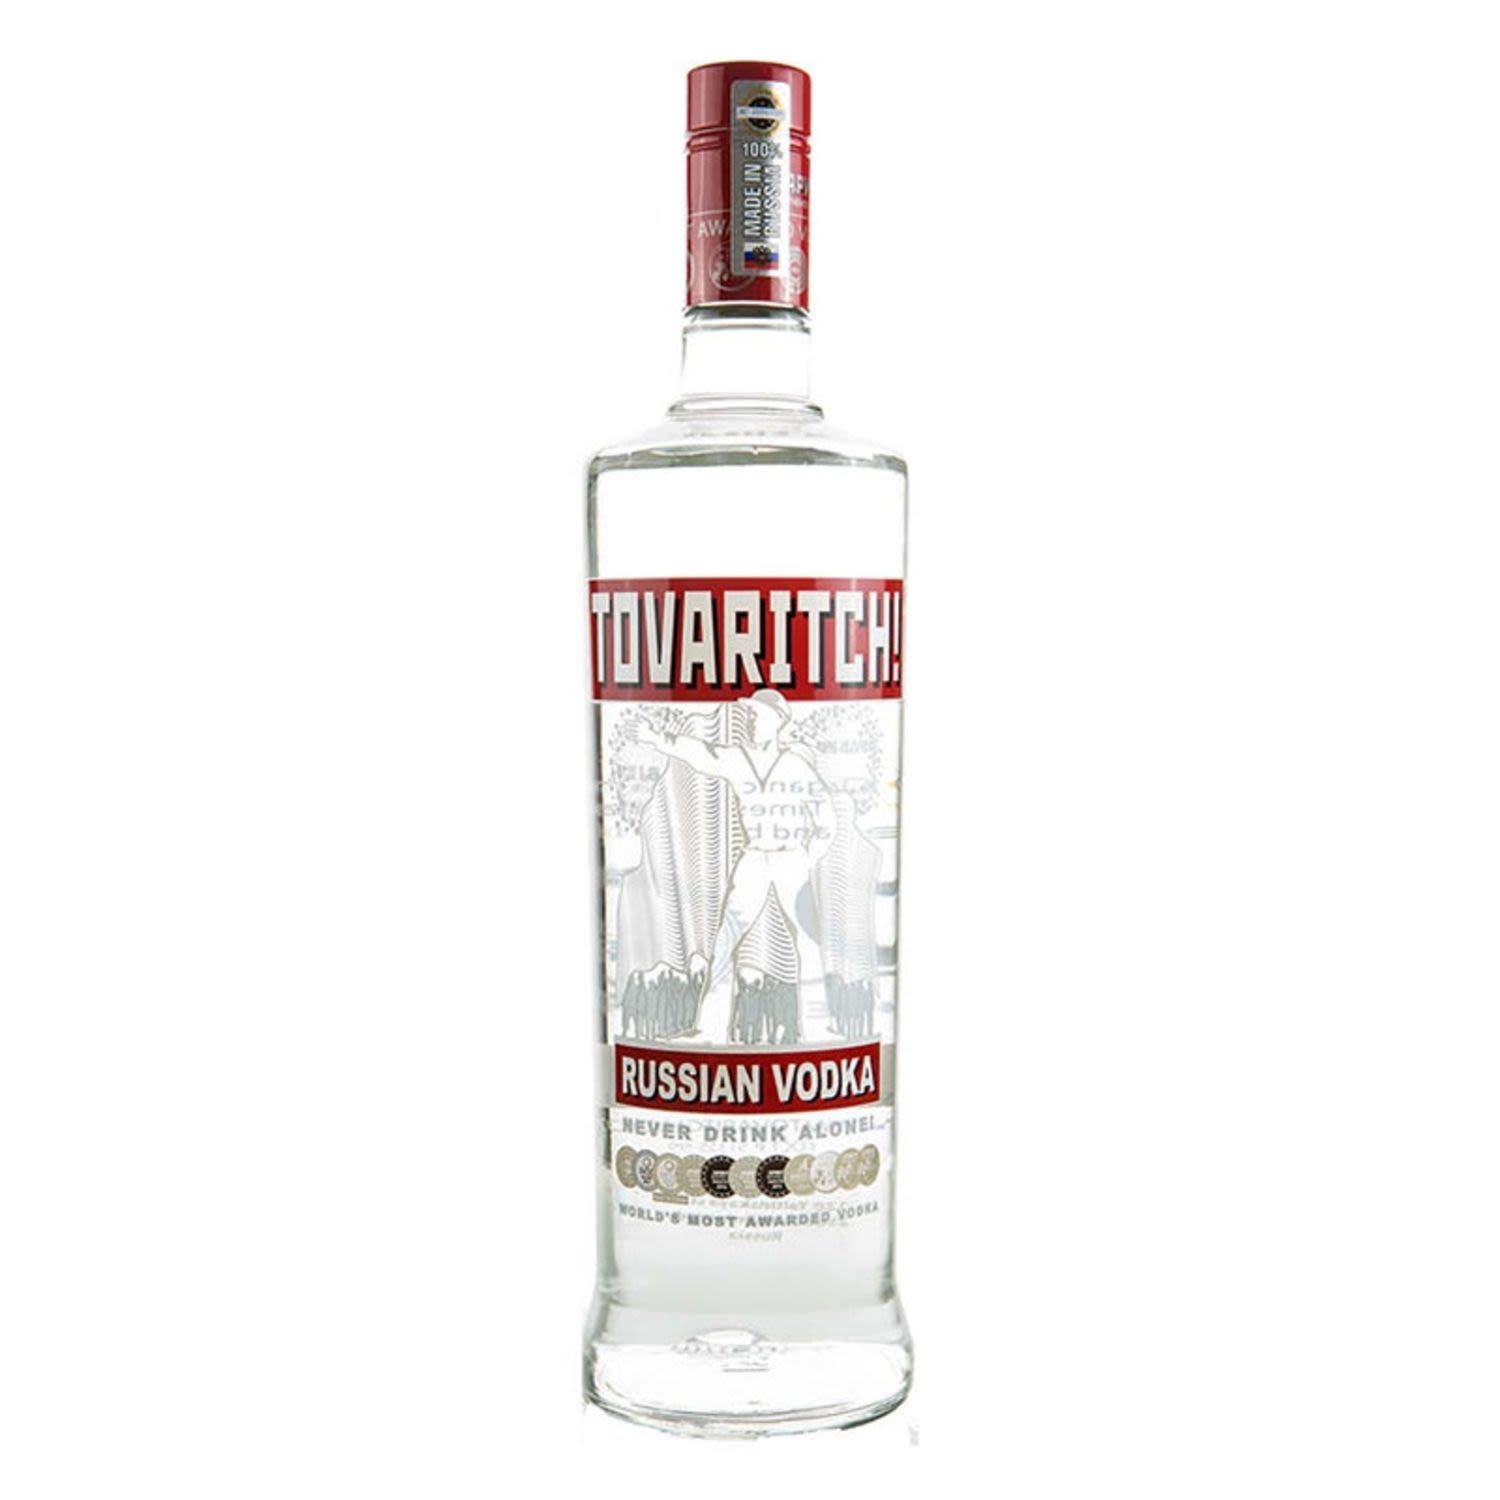 TOVARITCH! Premium Russian Vodka 1L Bottle